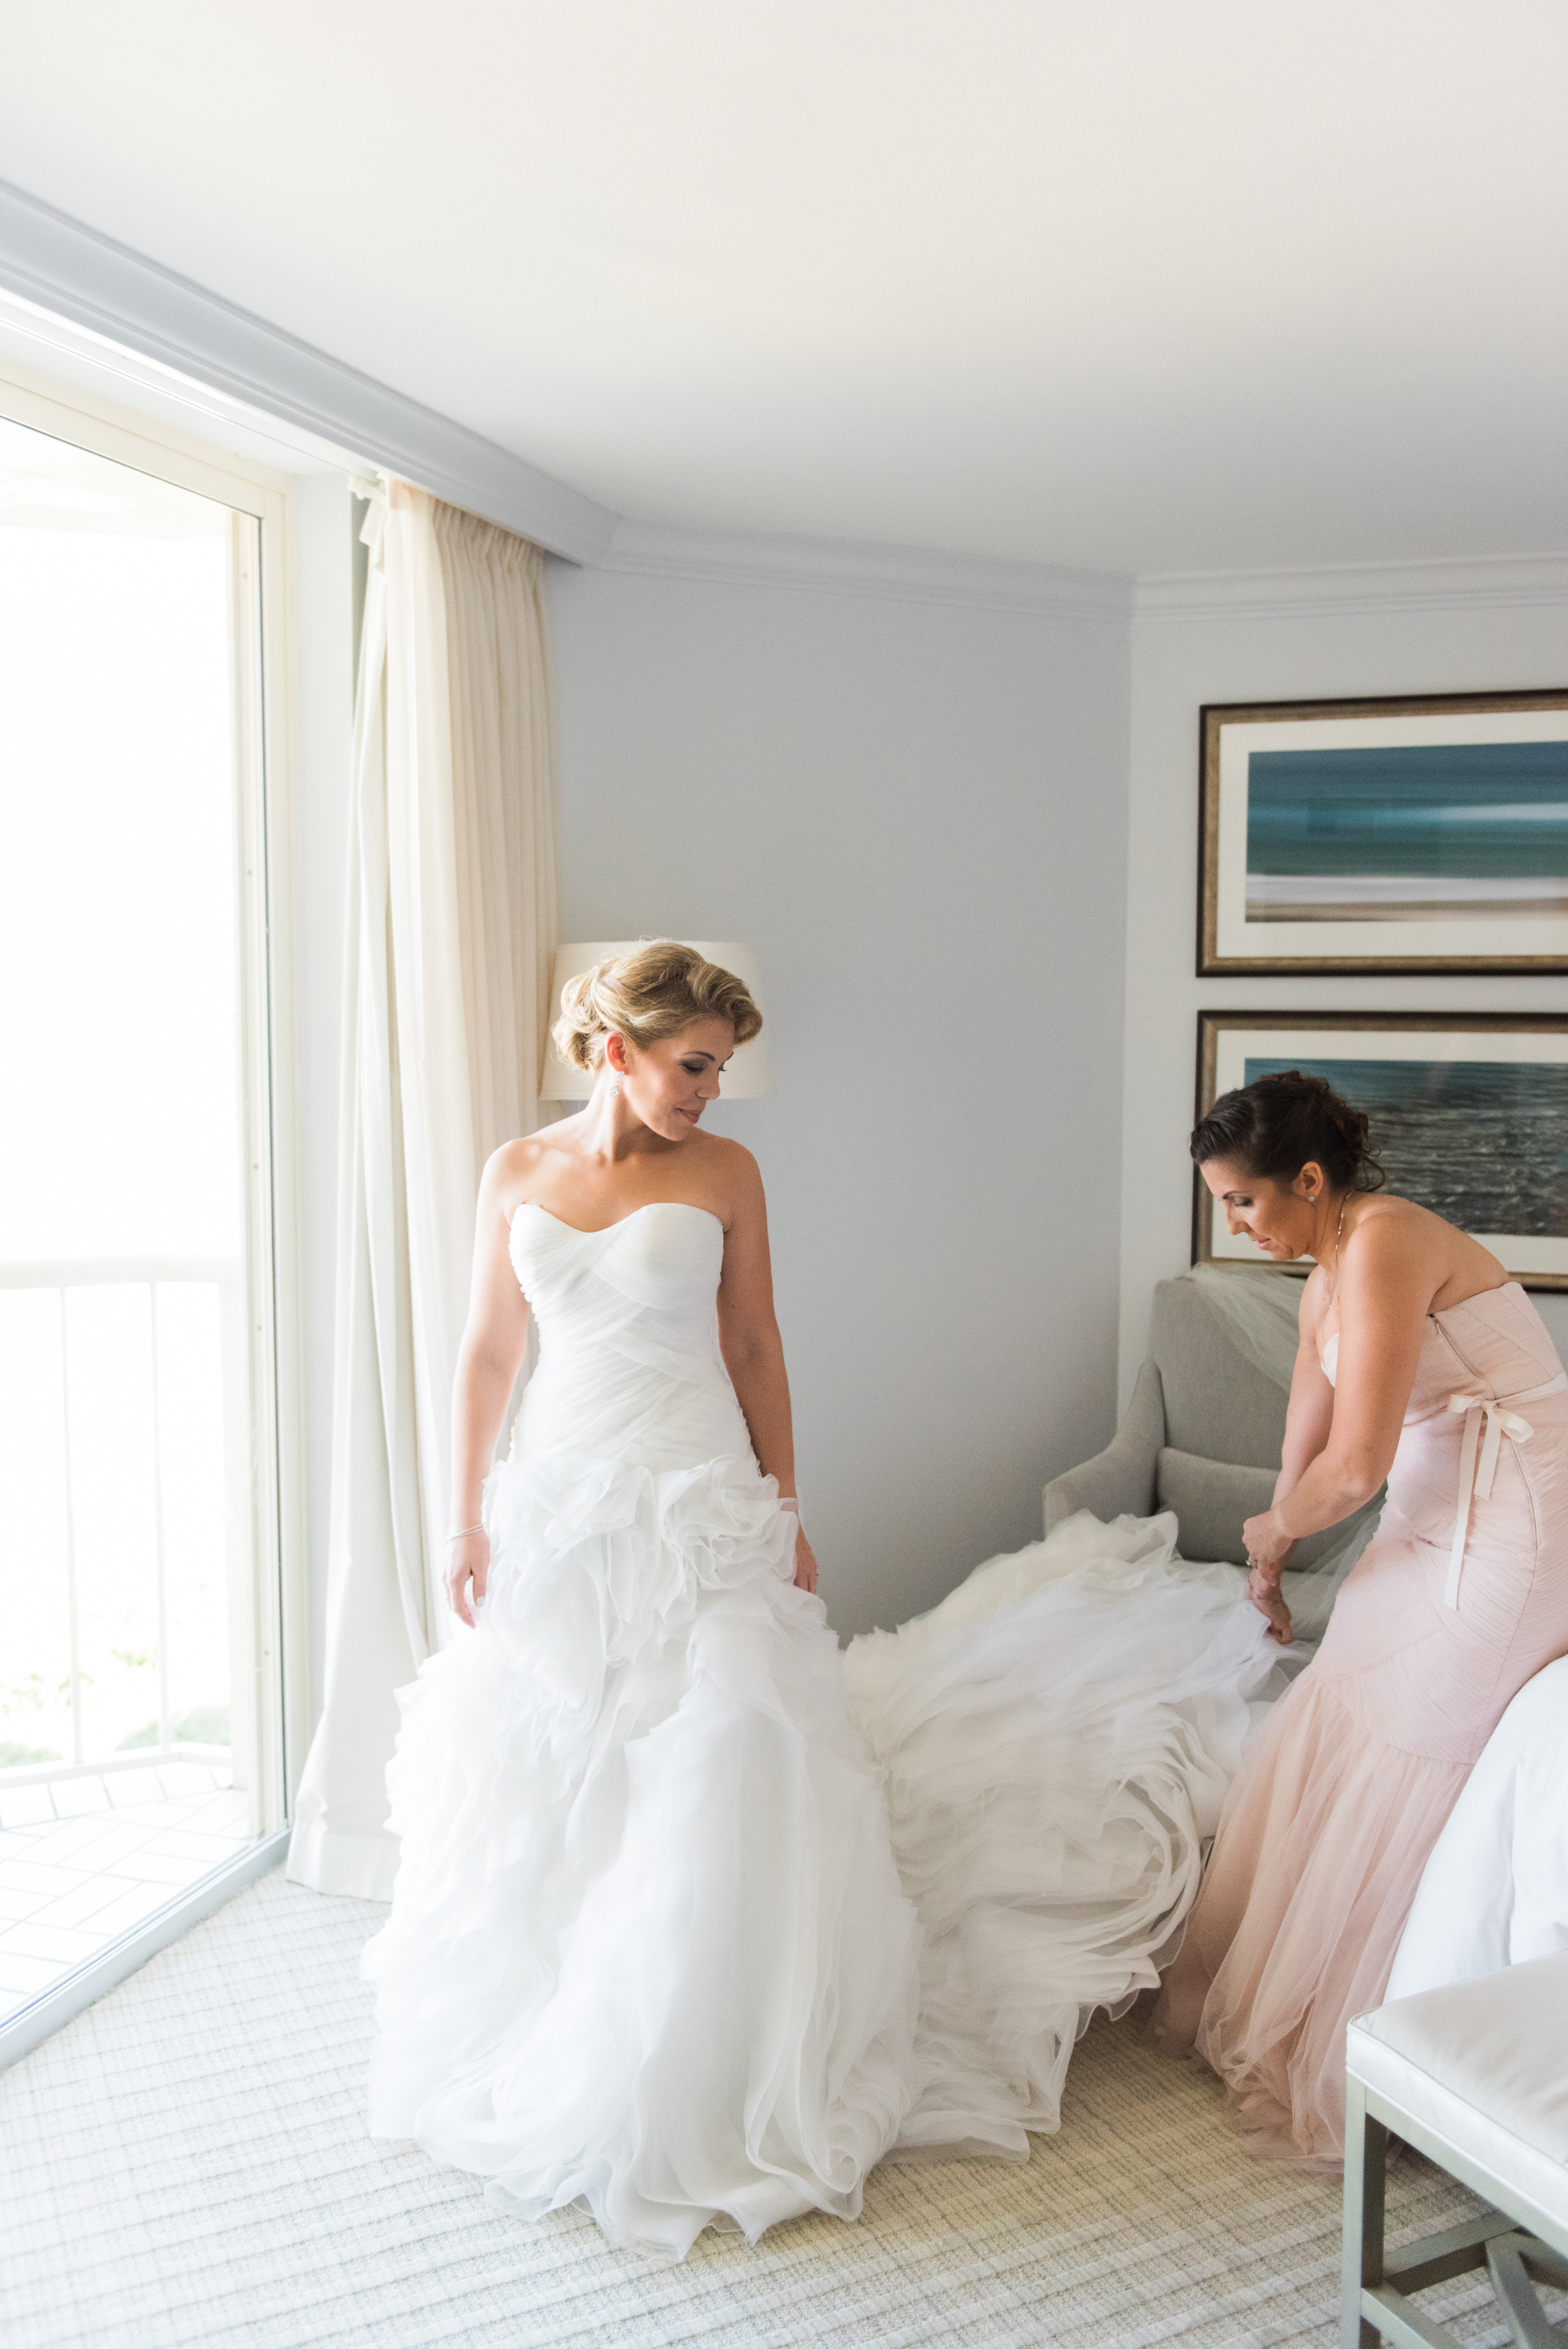 Gorgeous Wedding Dresses - Flagler Museum Palm Beach Wedding Venue - The Overwhelmed Bride Wedding Blog